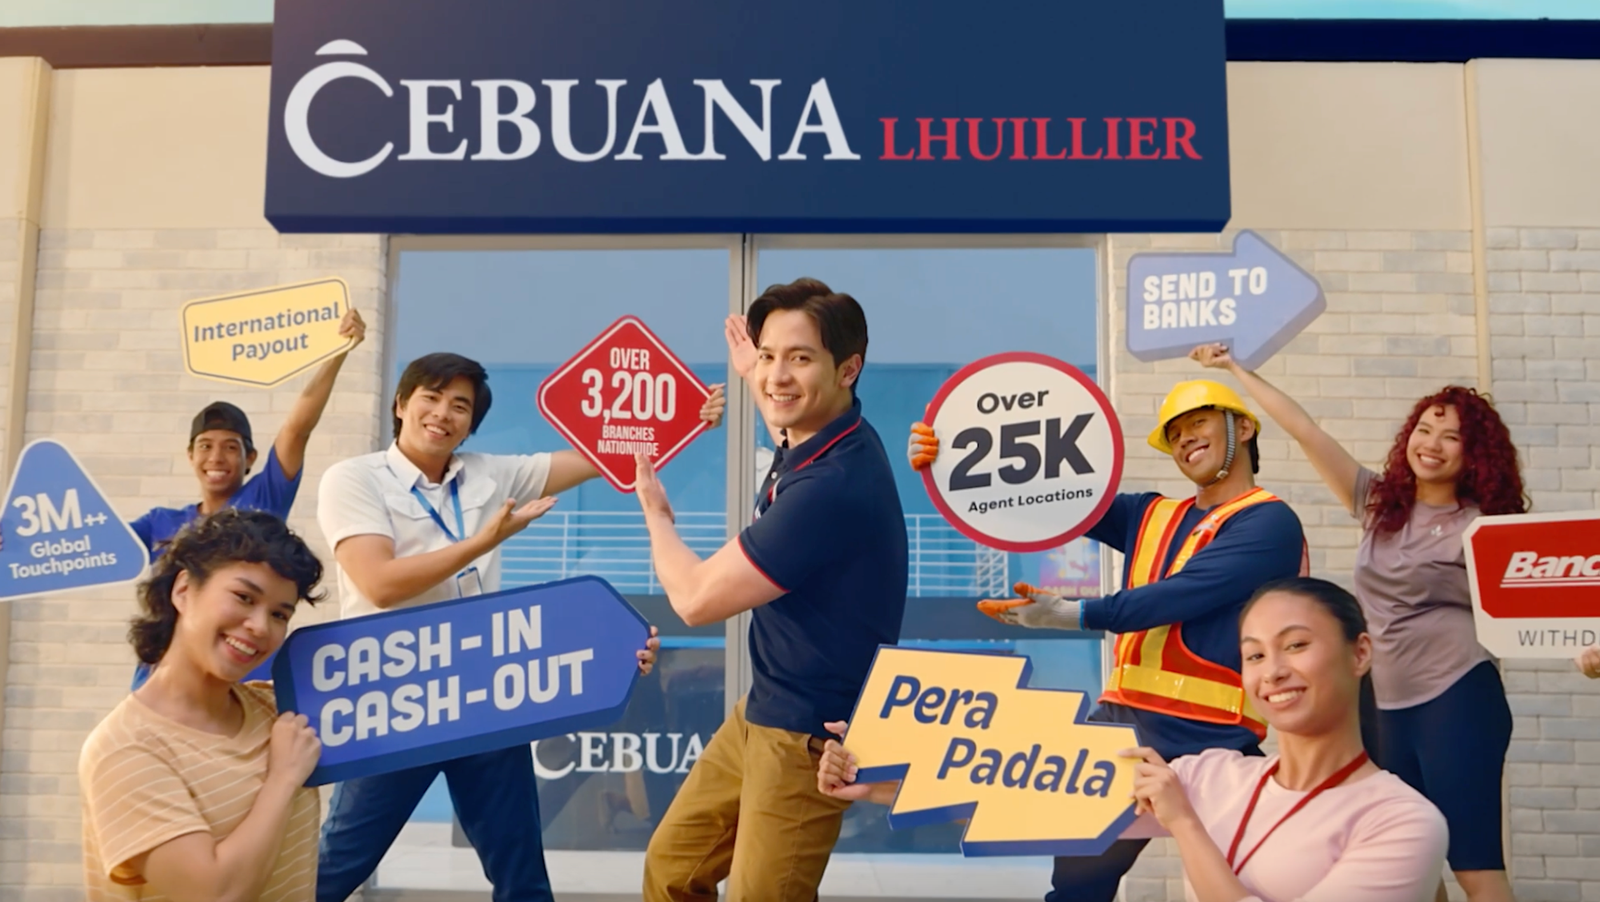 Cebuana Lhuillier Defines Money Transfer Services in ‘So Money Ways’